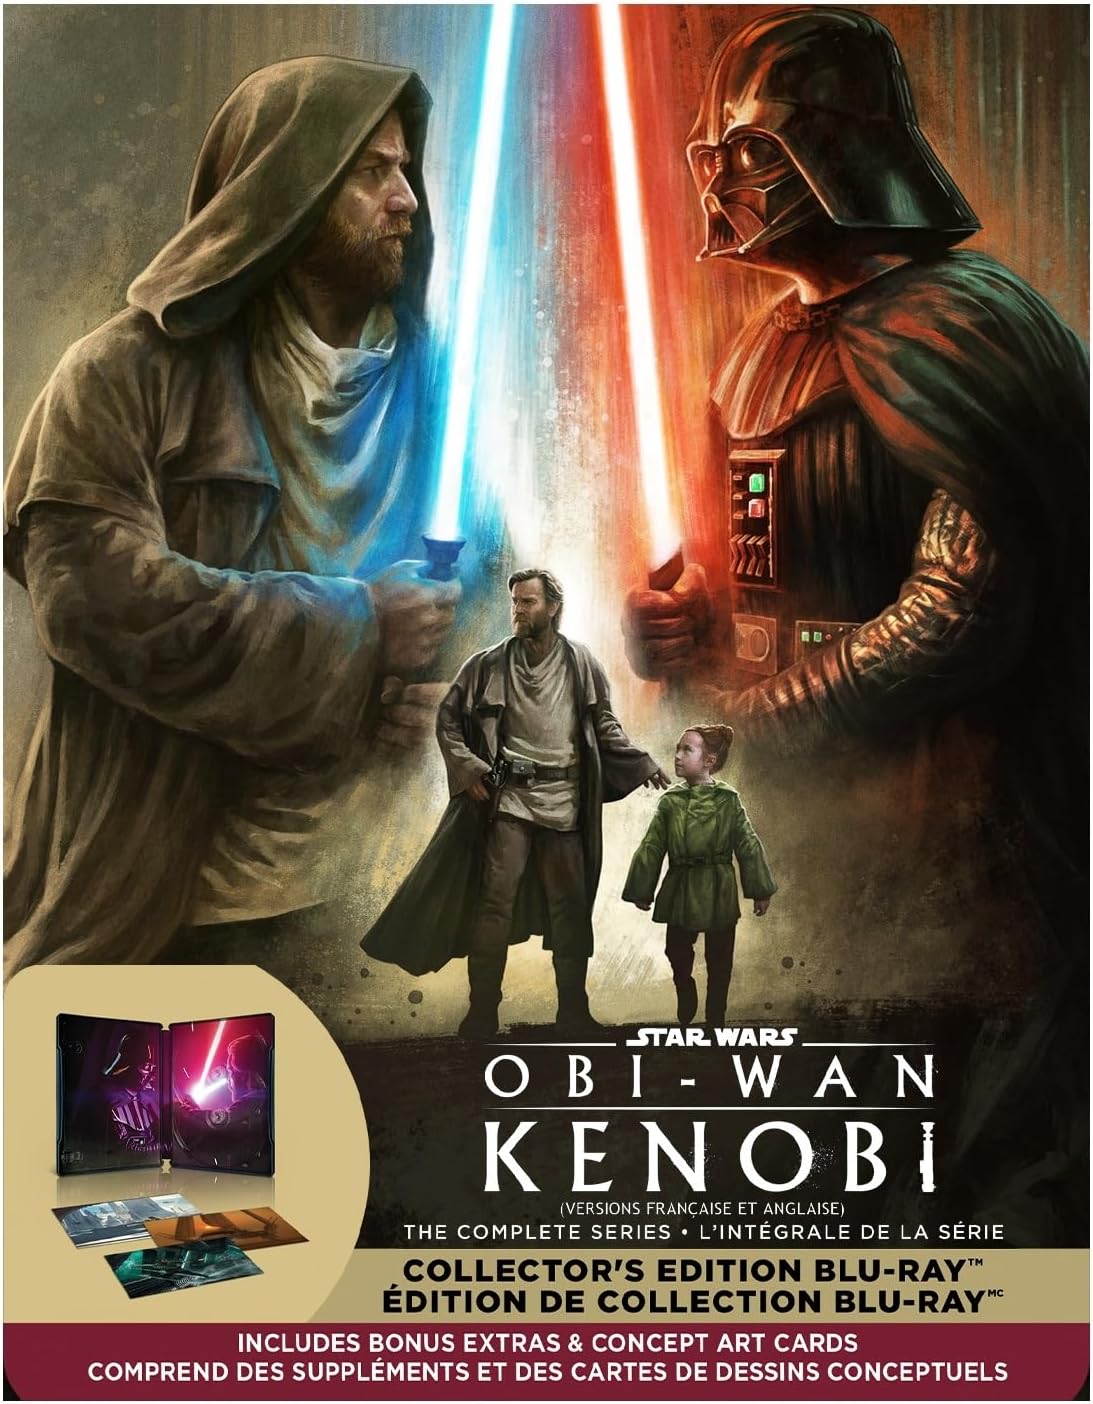 Star Wars/Obi-Wan Kenobi: The Complete Series (Steelbook) [BluRay]